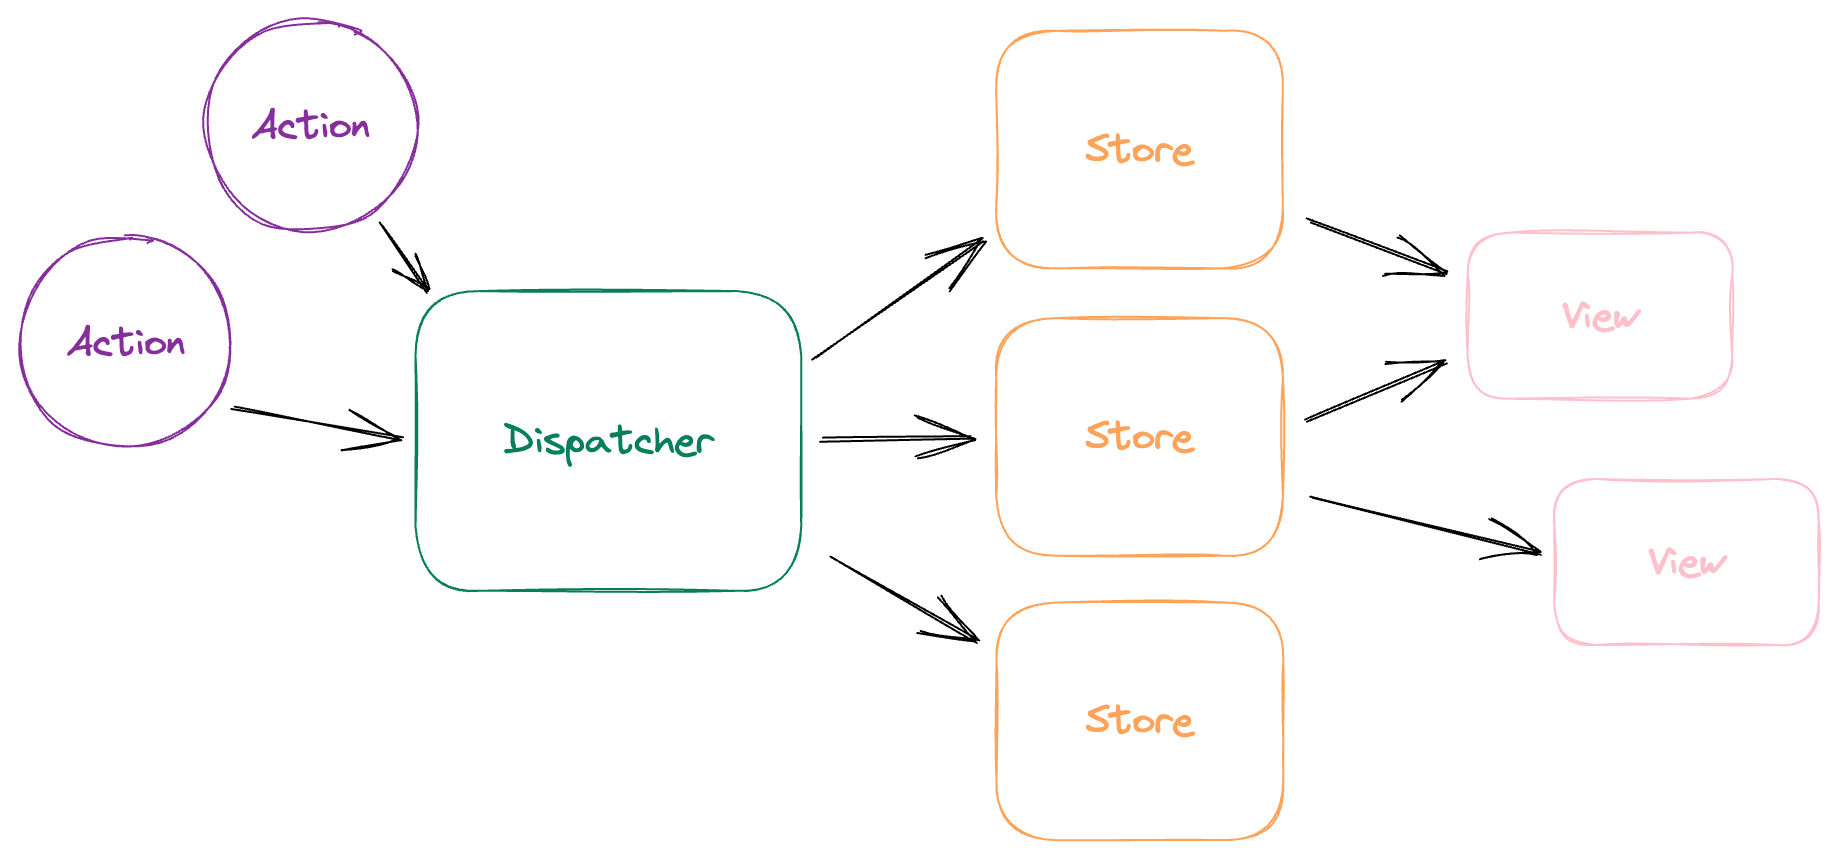 Actions -&gt; Dispatcher -&gt; Stores -&gt; Views